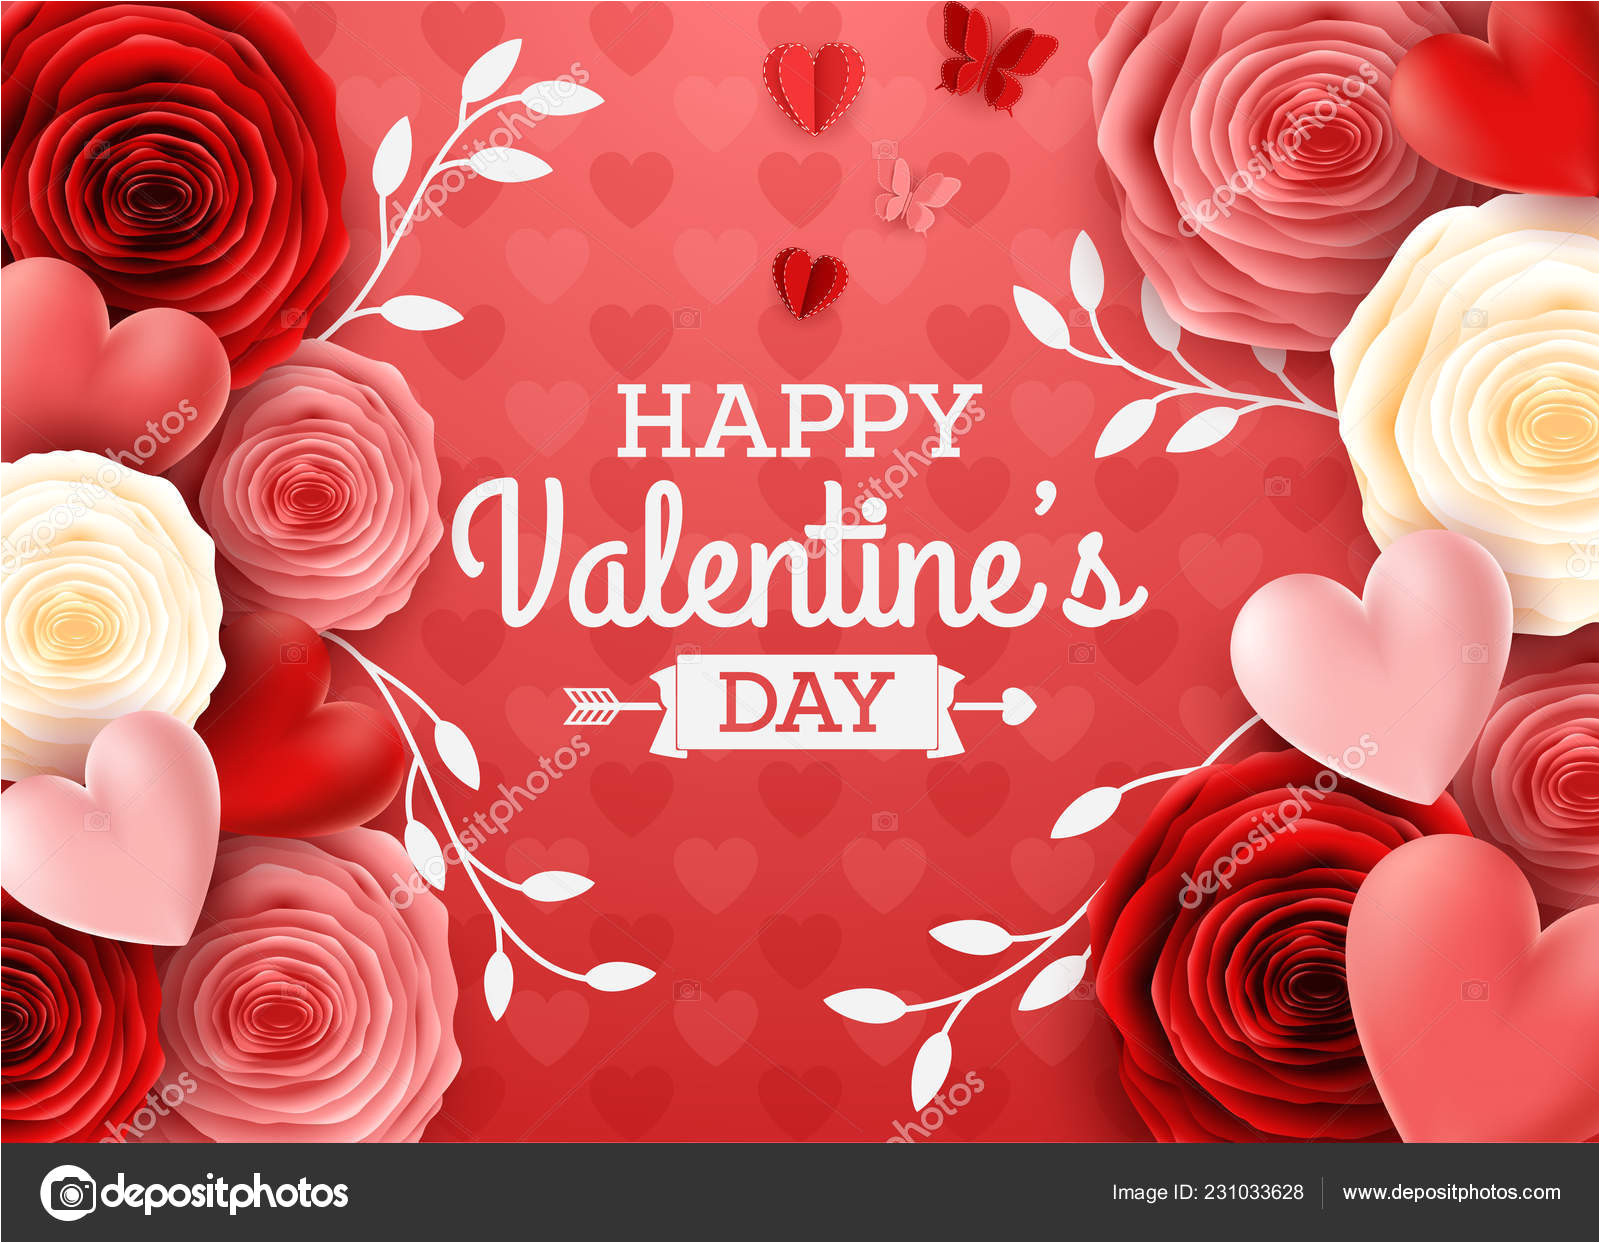 depositphotos 231033628 stock illustration valentines day greeting card rose jpg